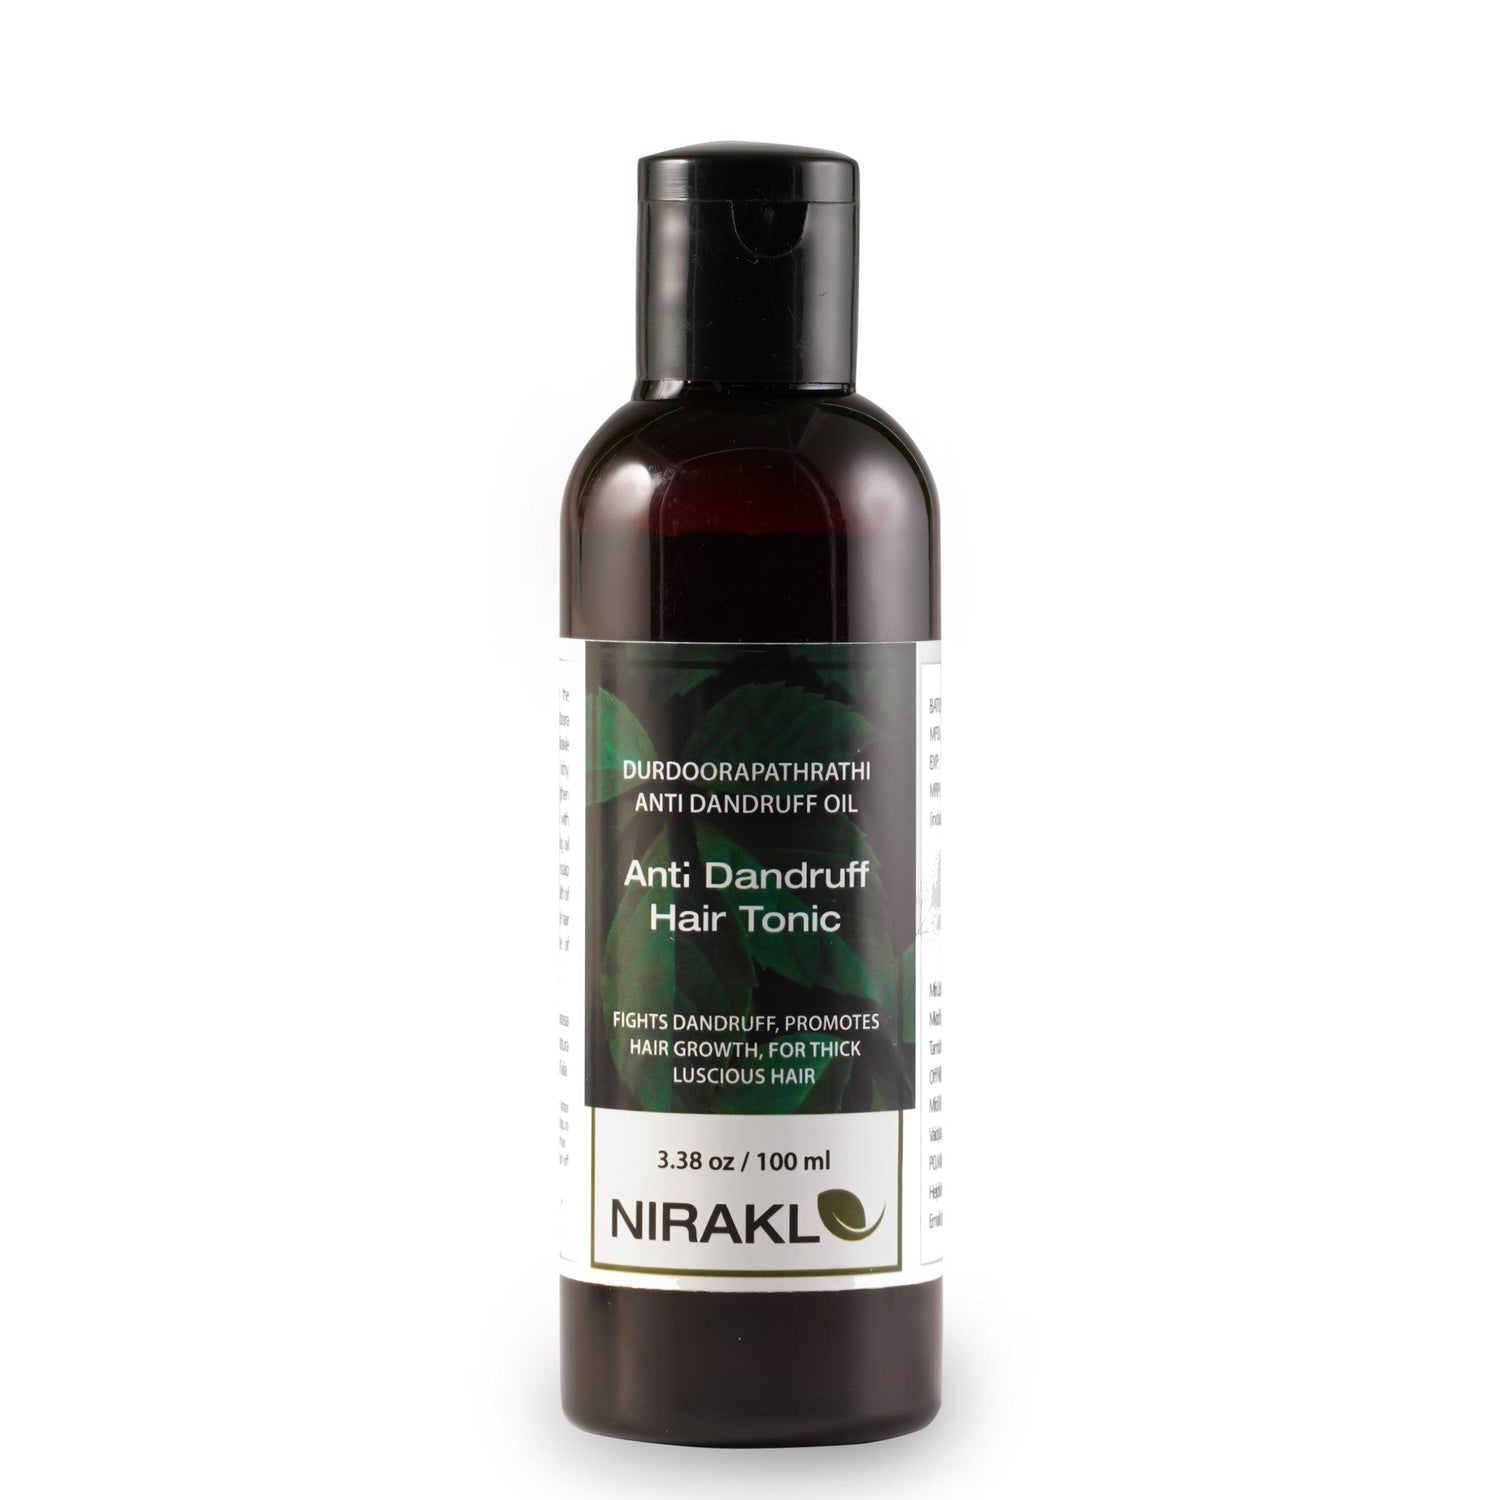 Anti Dandruff Hair Tonic | Nirakle DurdooraPathradi Anti Dandruff Oil - Nirakle